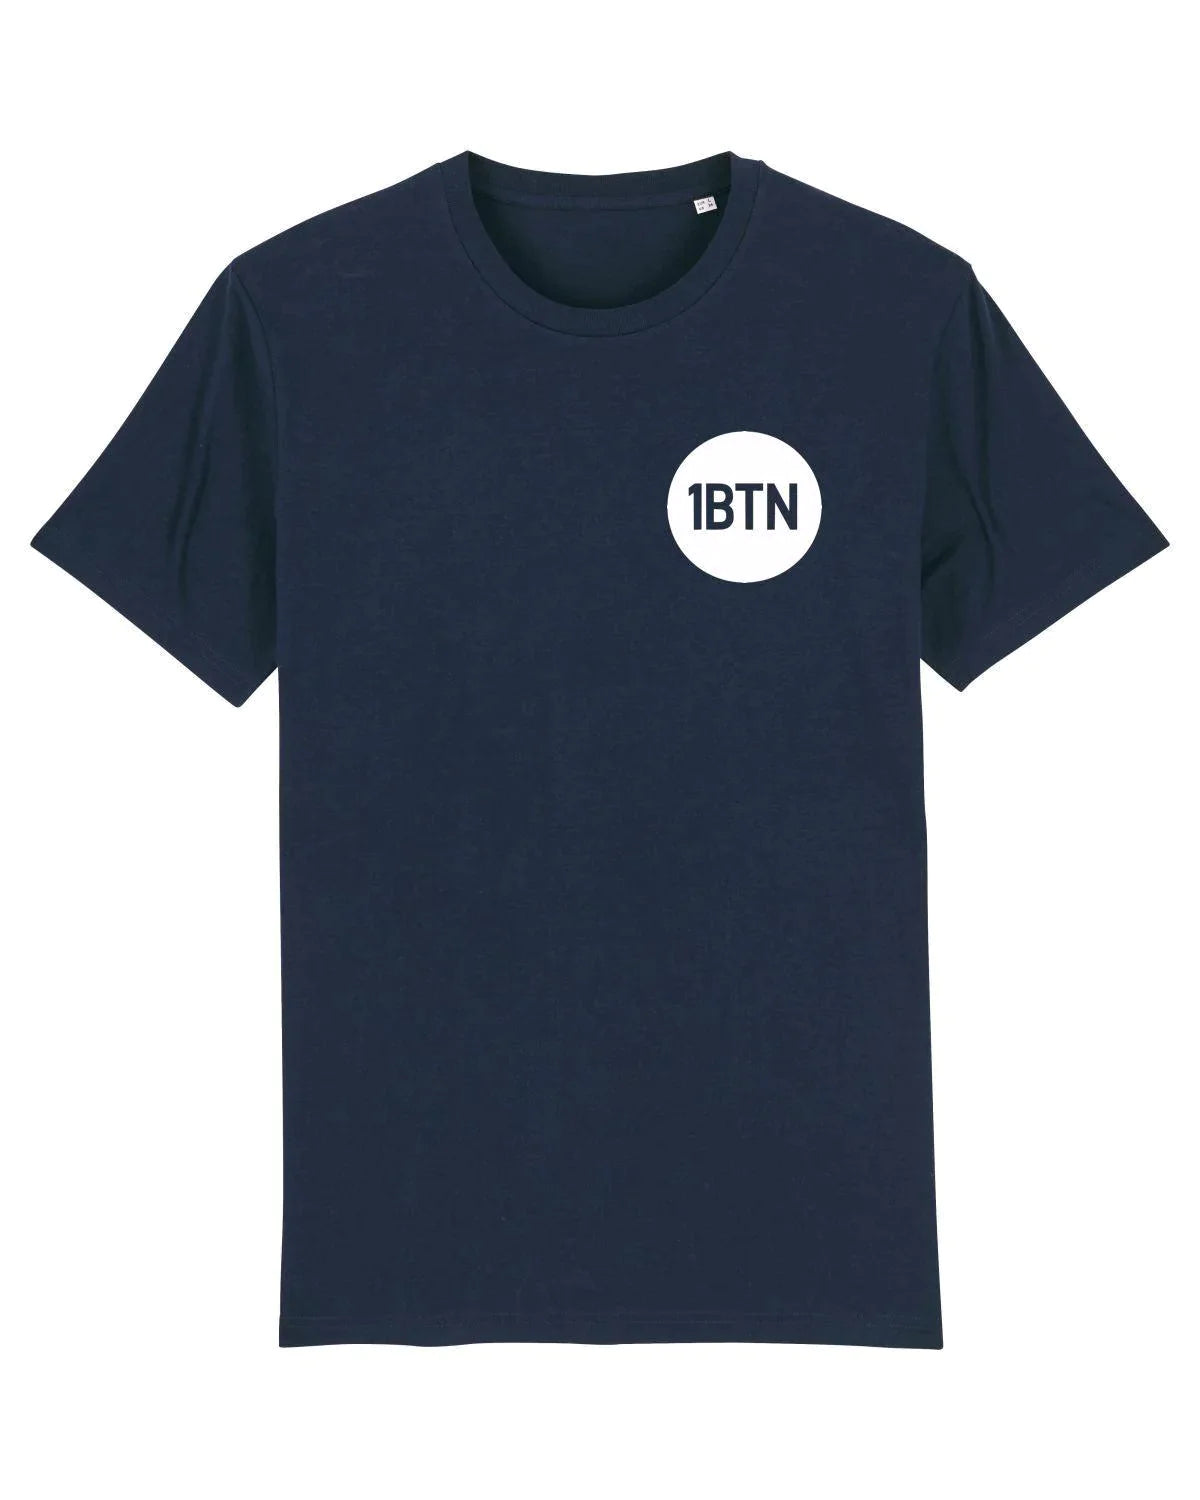 1BTN LOGO: 2 Sided T-Shirt Official Merchandise of 1BTN.FM (5 Colour Options) - SOUND IS COLOUR